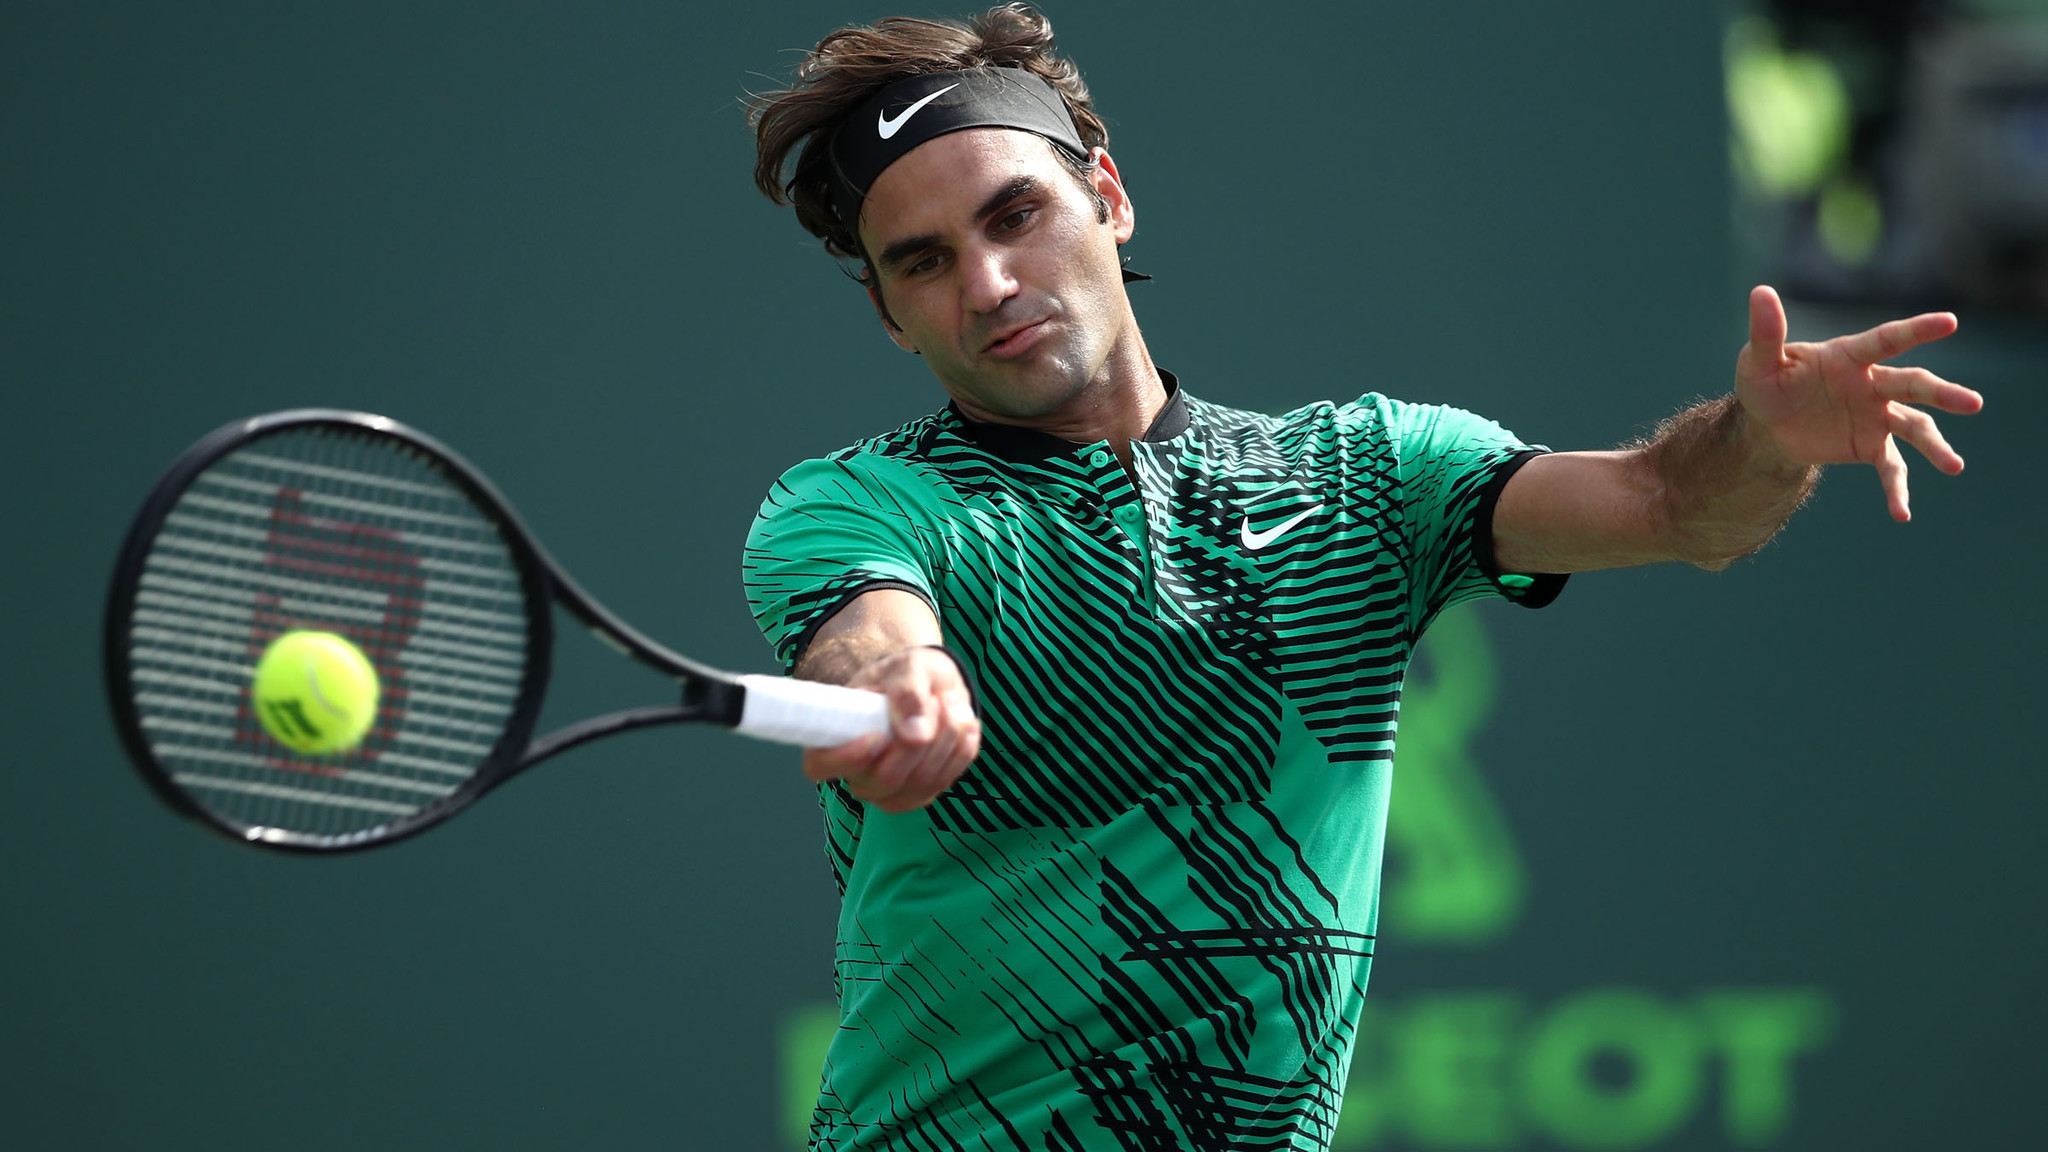 Tennis: Roger Federer, Caroline Wozniacki reach semifinals at Miami Open - LA Times